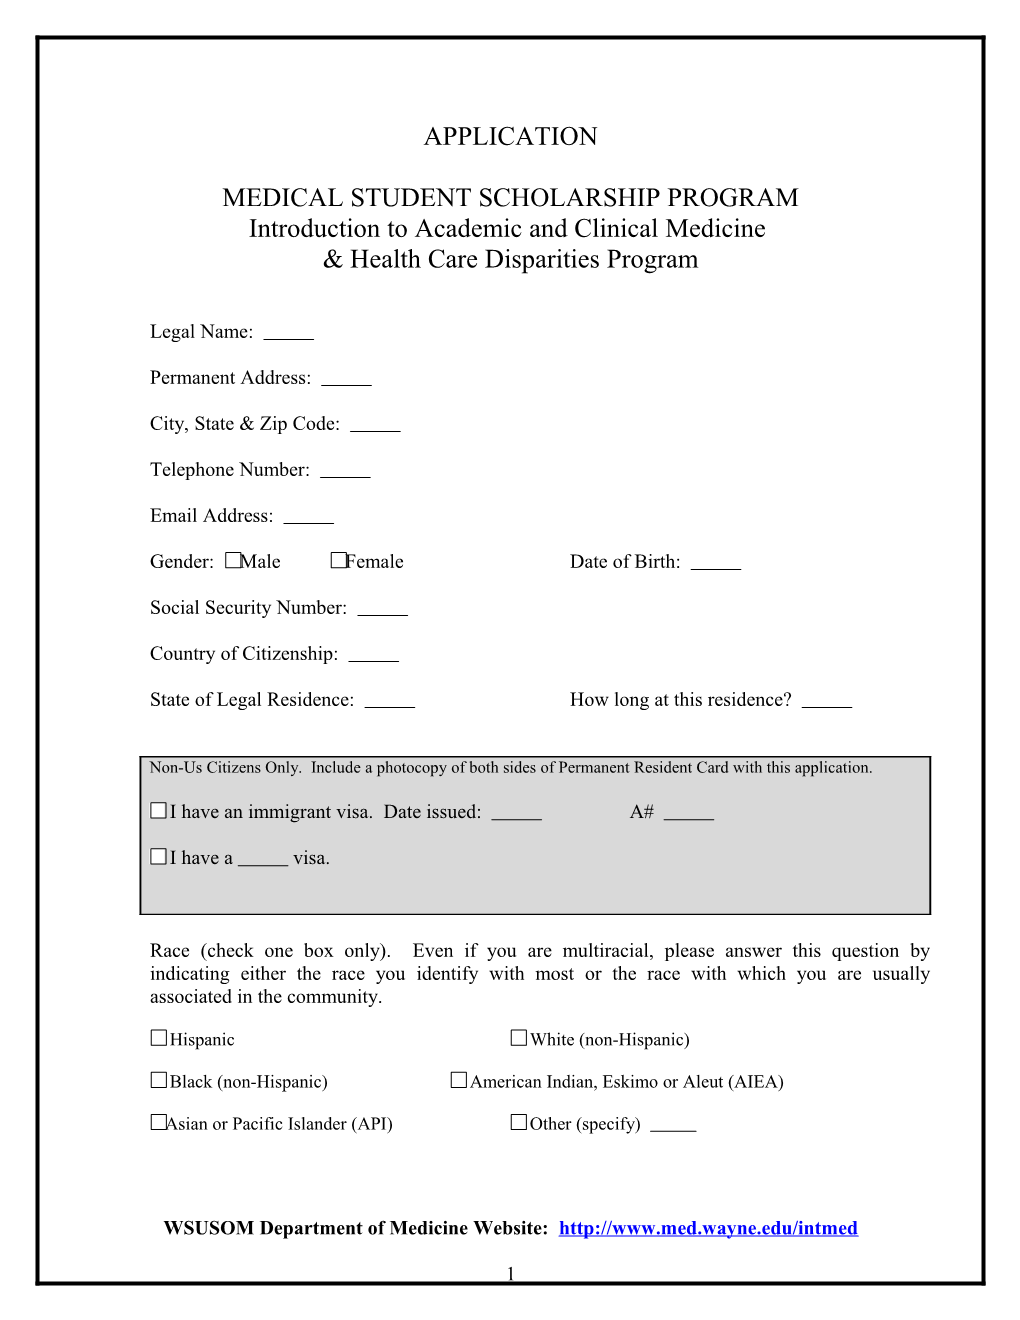 Medical Student Scholarship Program